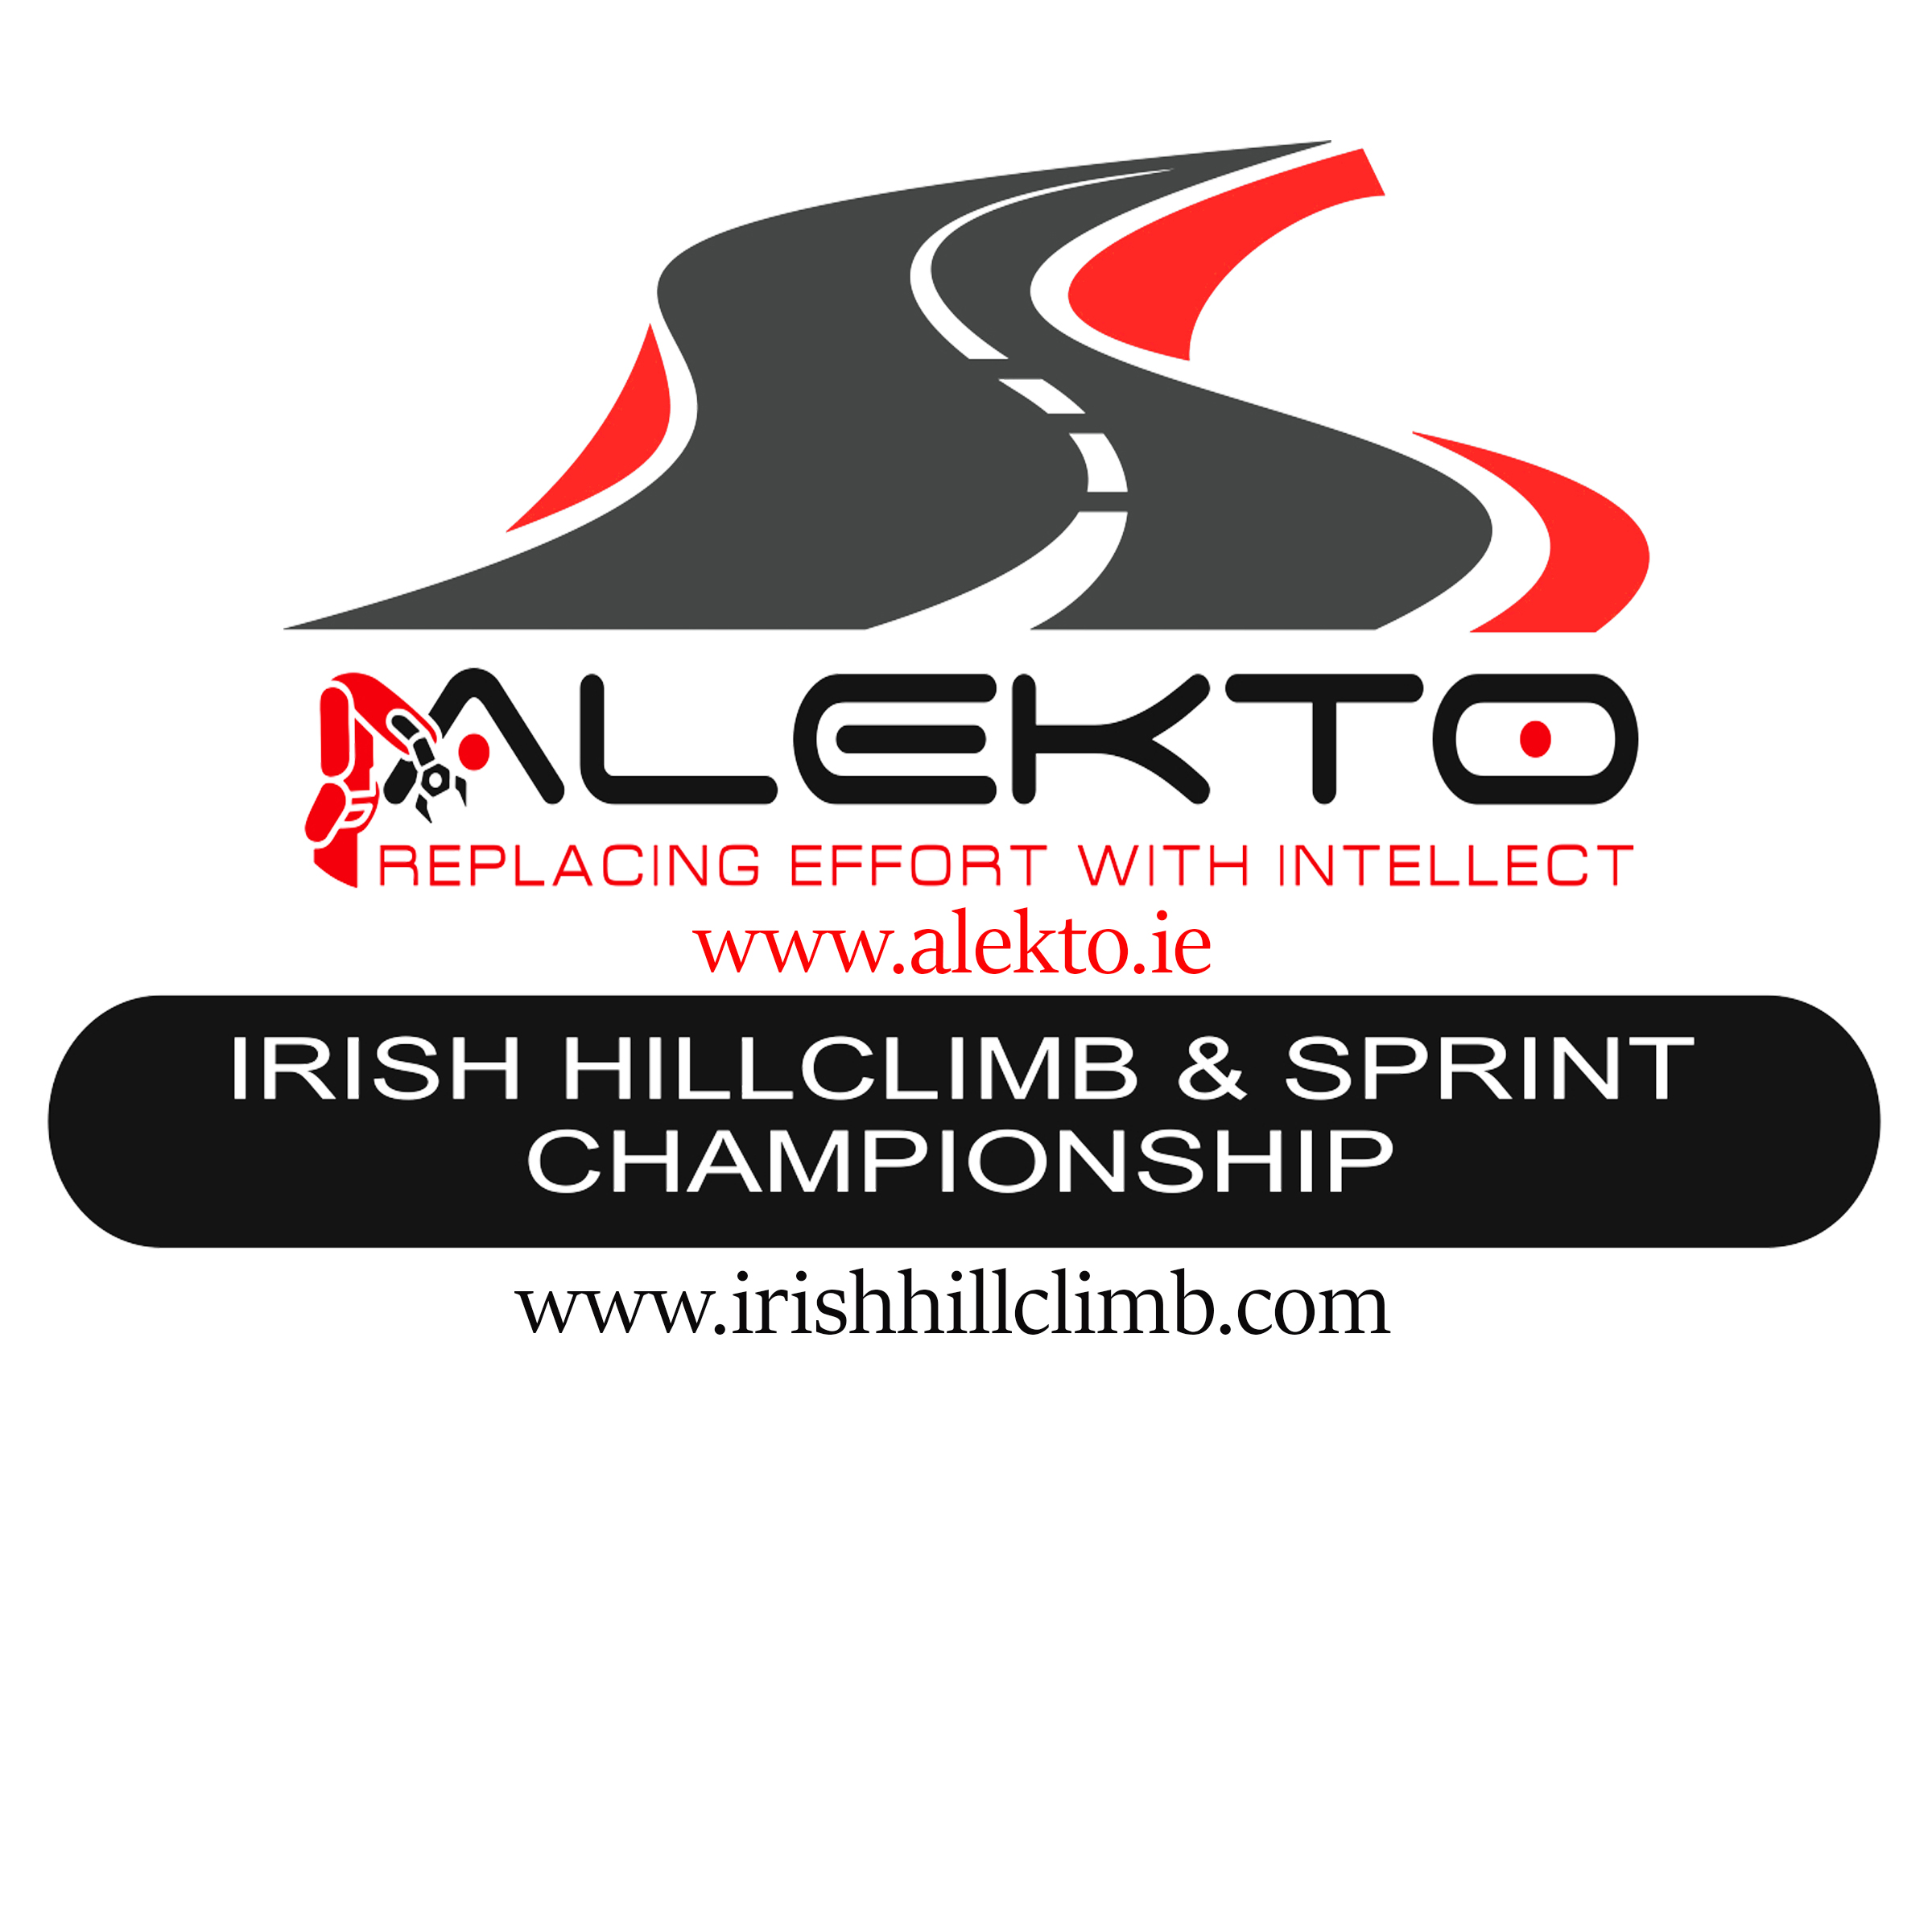 Alekto Championship